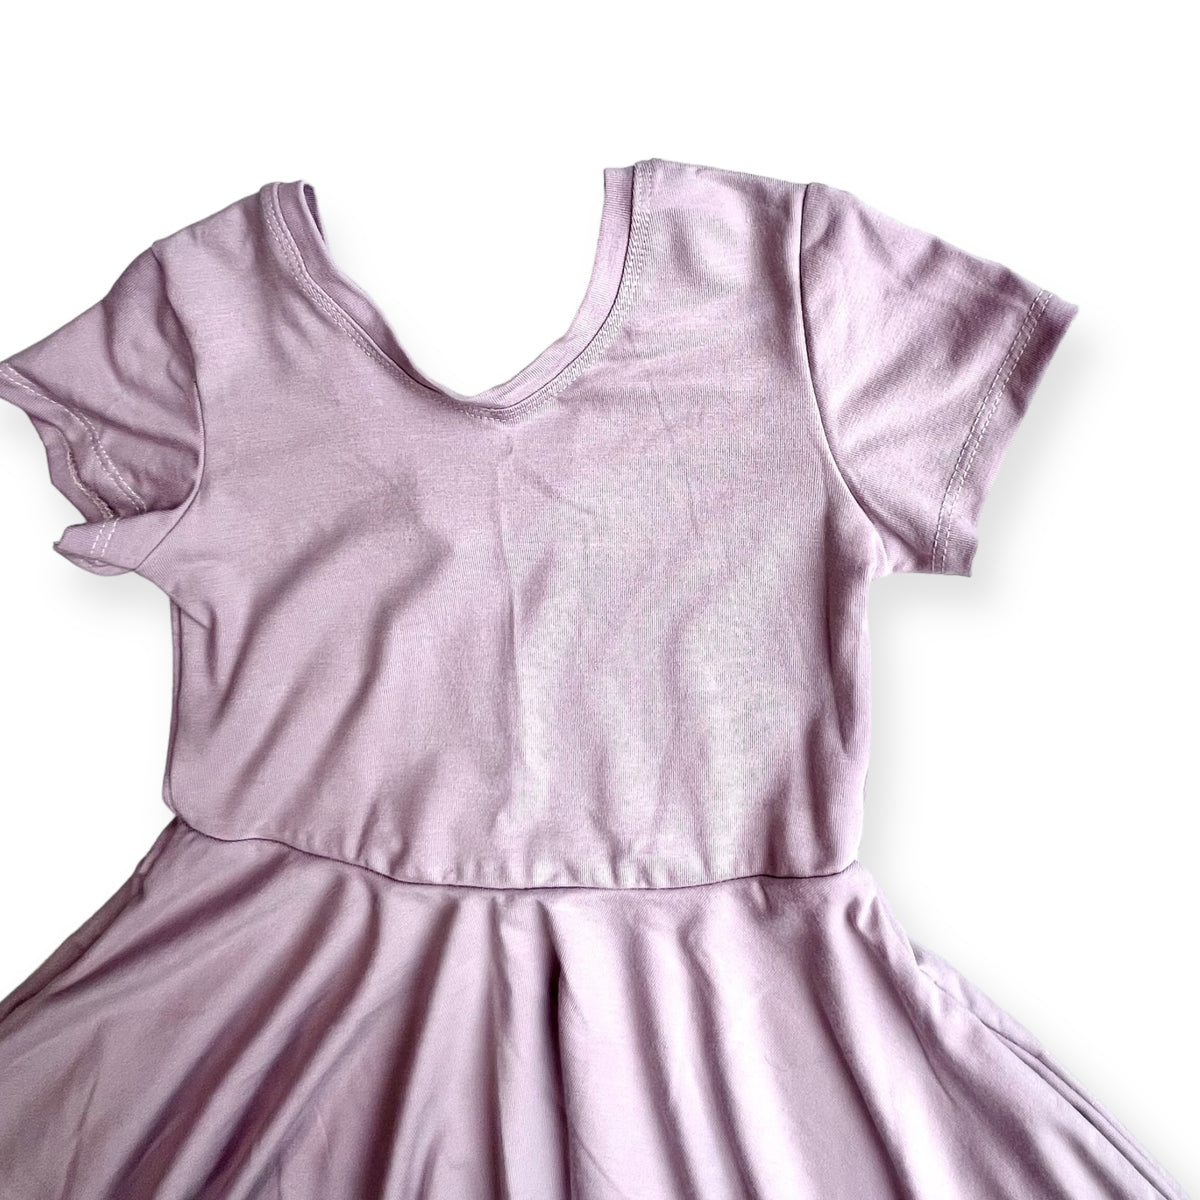 Elle Twirl Dress [Cap Sleeve] in 'Lavender' - Ready To Ship